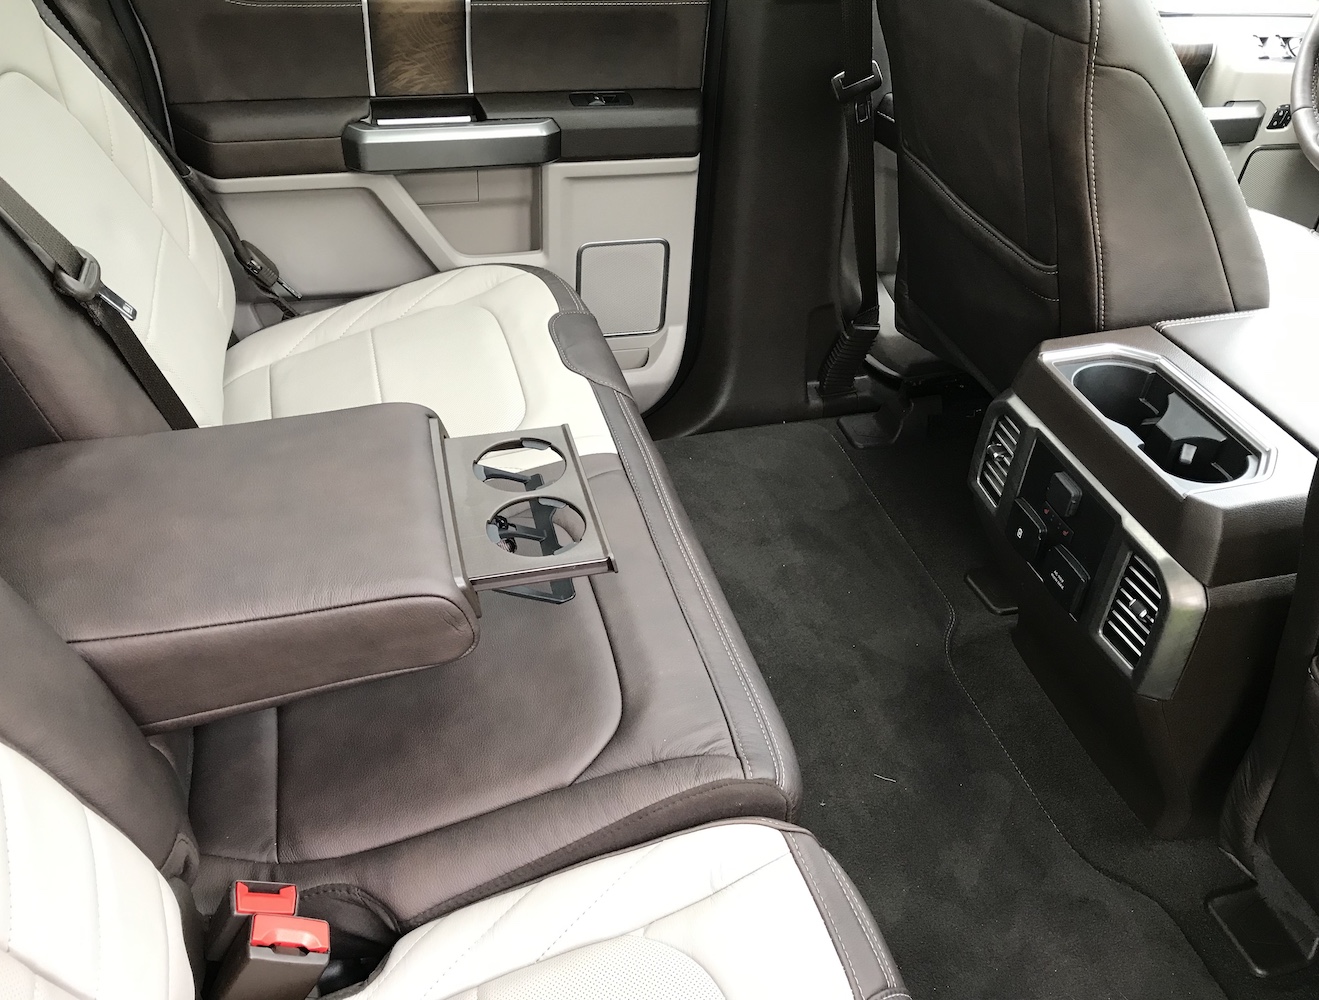 https://carseatblog.com/wp-content/uploads/2019/07/F150-back-seat.jpg